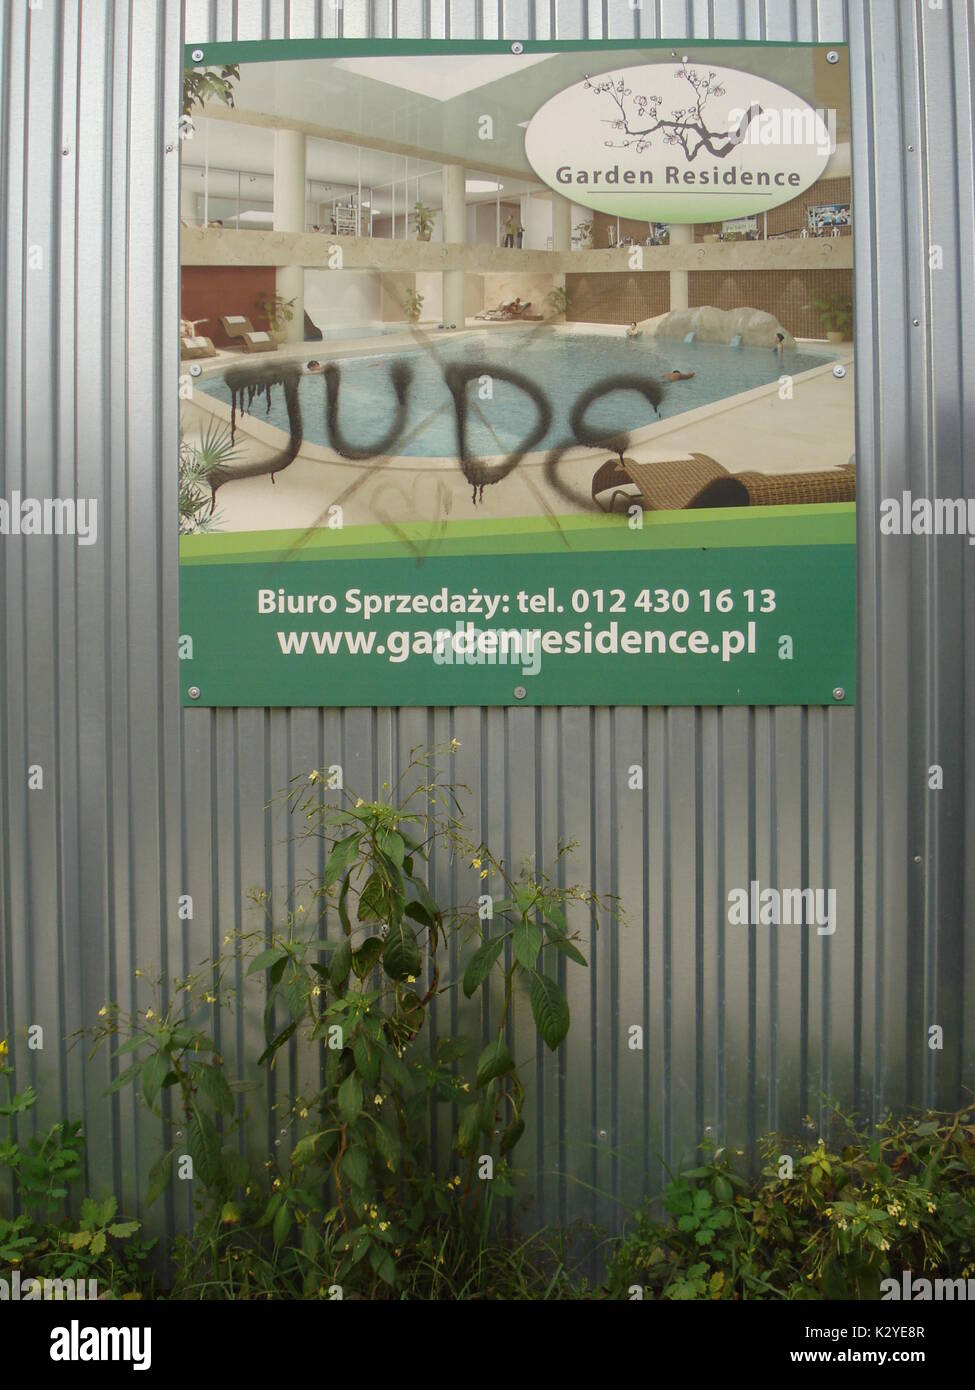 Insultos antisemitas en un cartel publicitario en Kracow (Polonia) Foto de stock